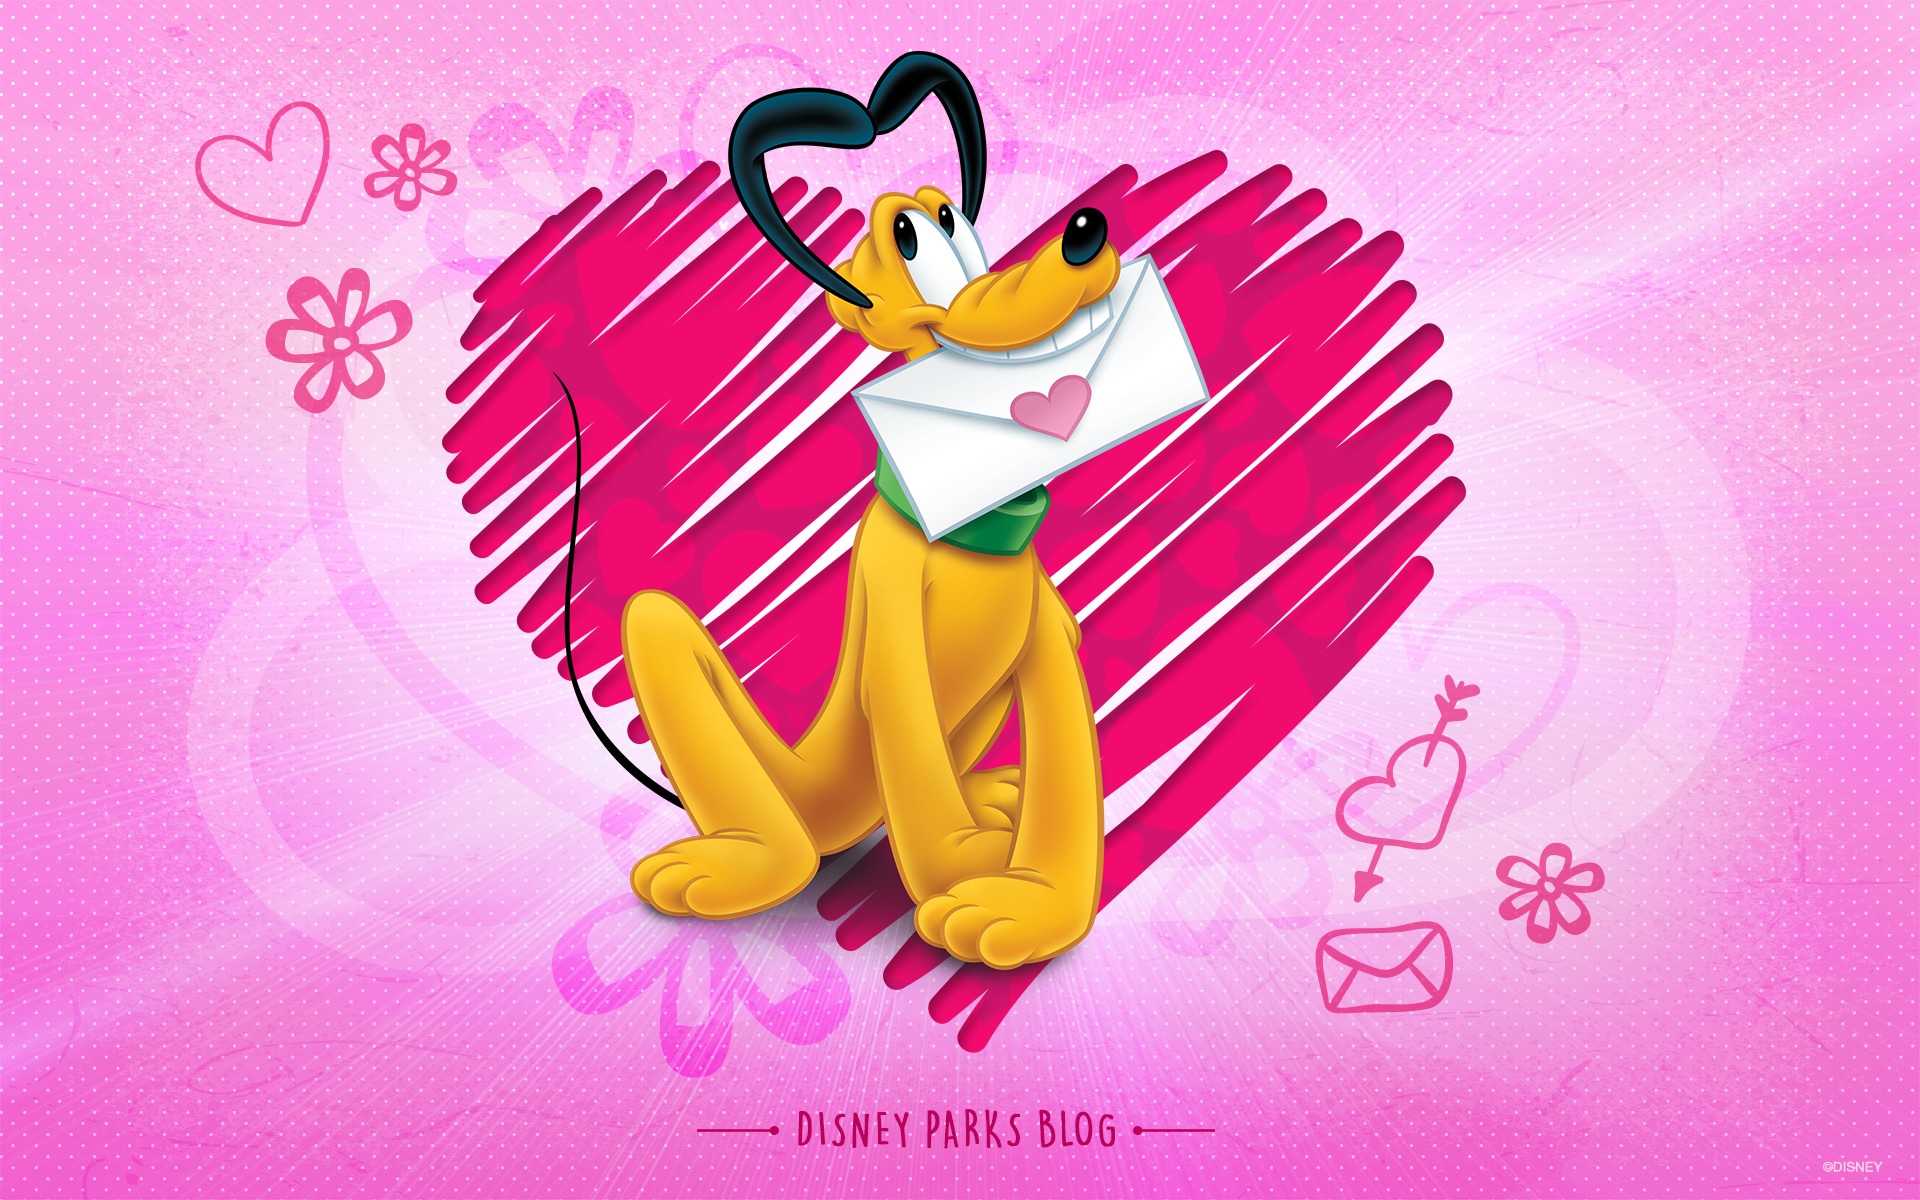 Celebrate Valentine’s Day with Pluto.